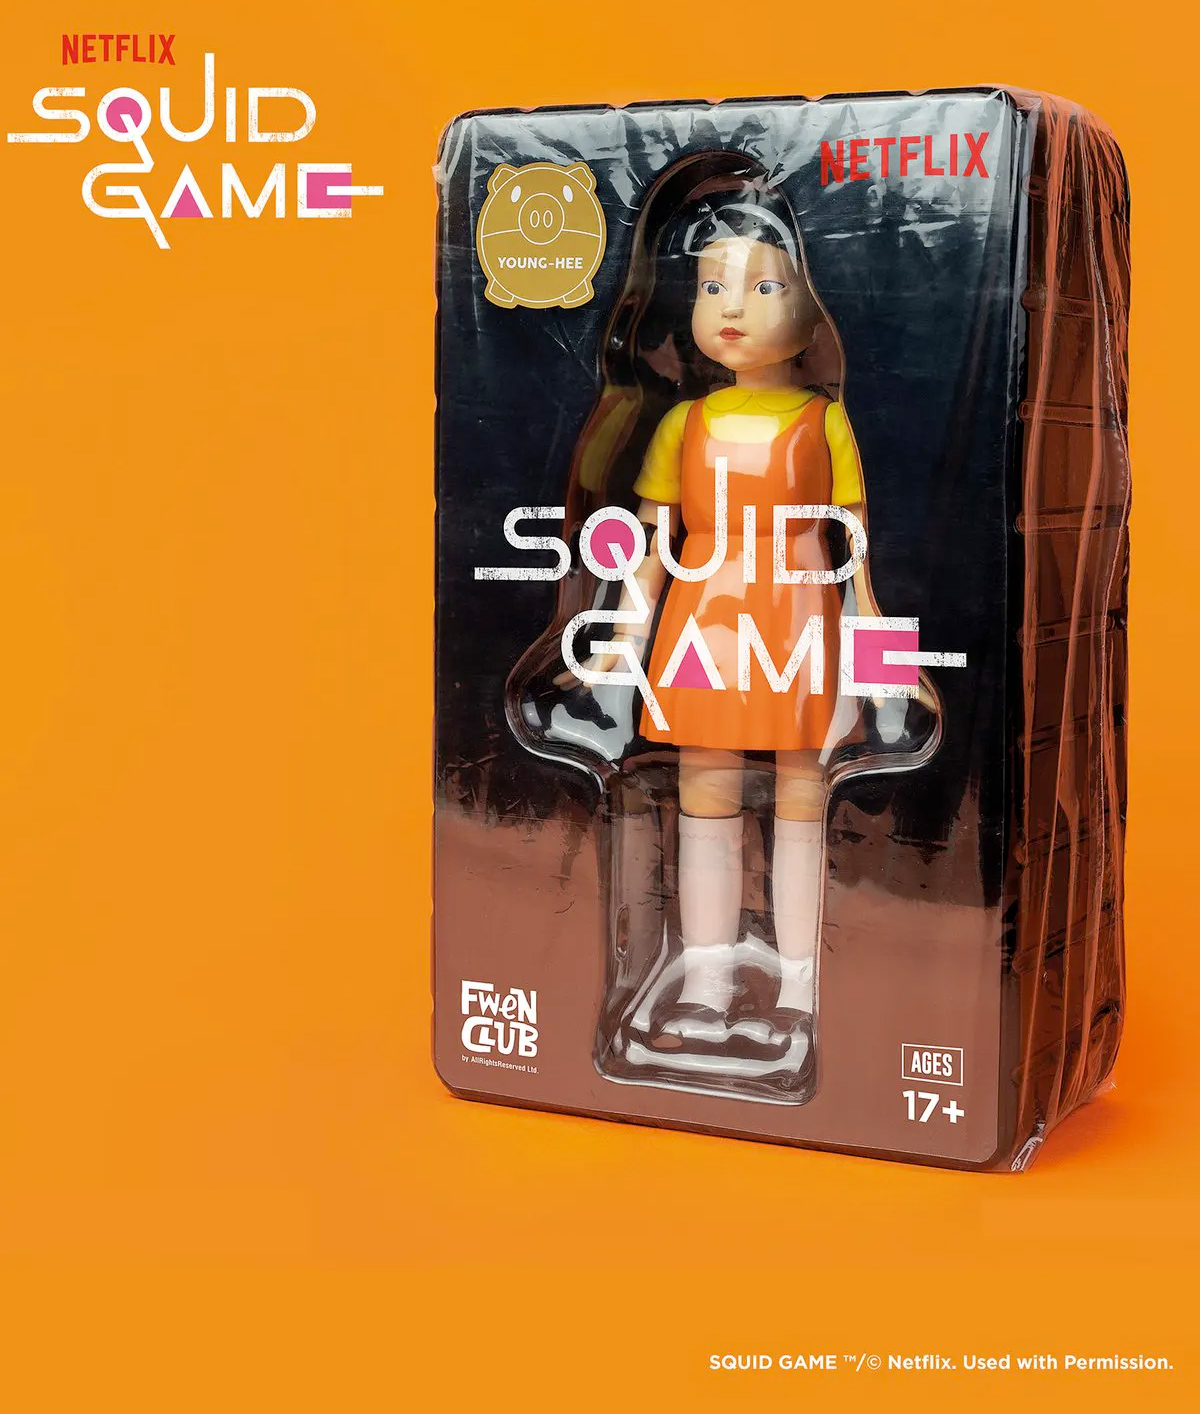 Boneca “Young-hee” da Série Round 6 (Squid Game) da Netflix